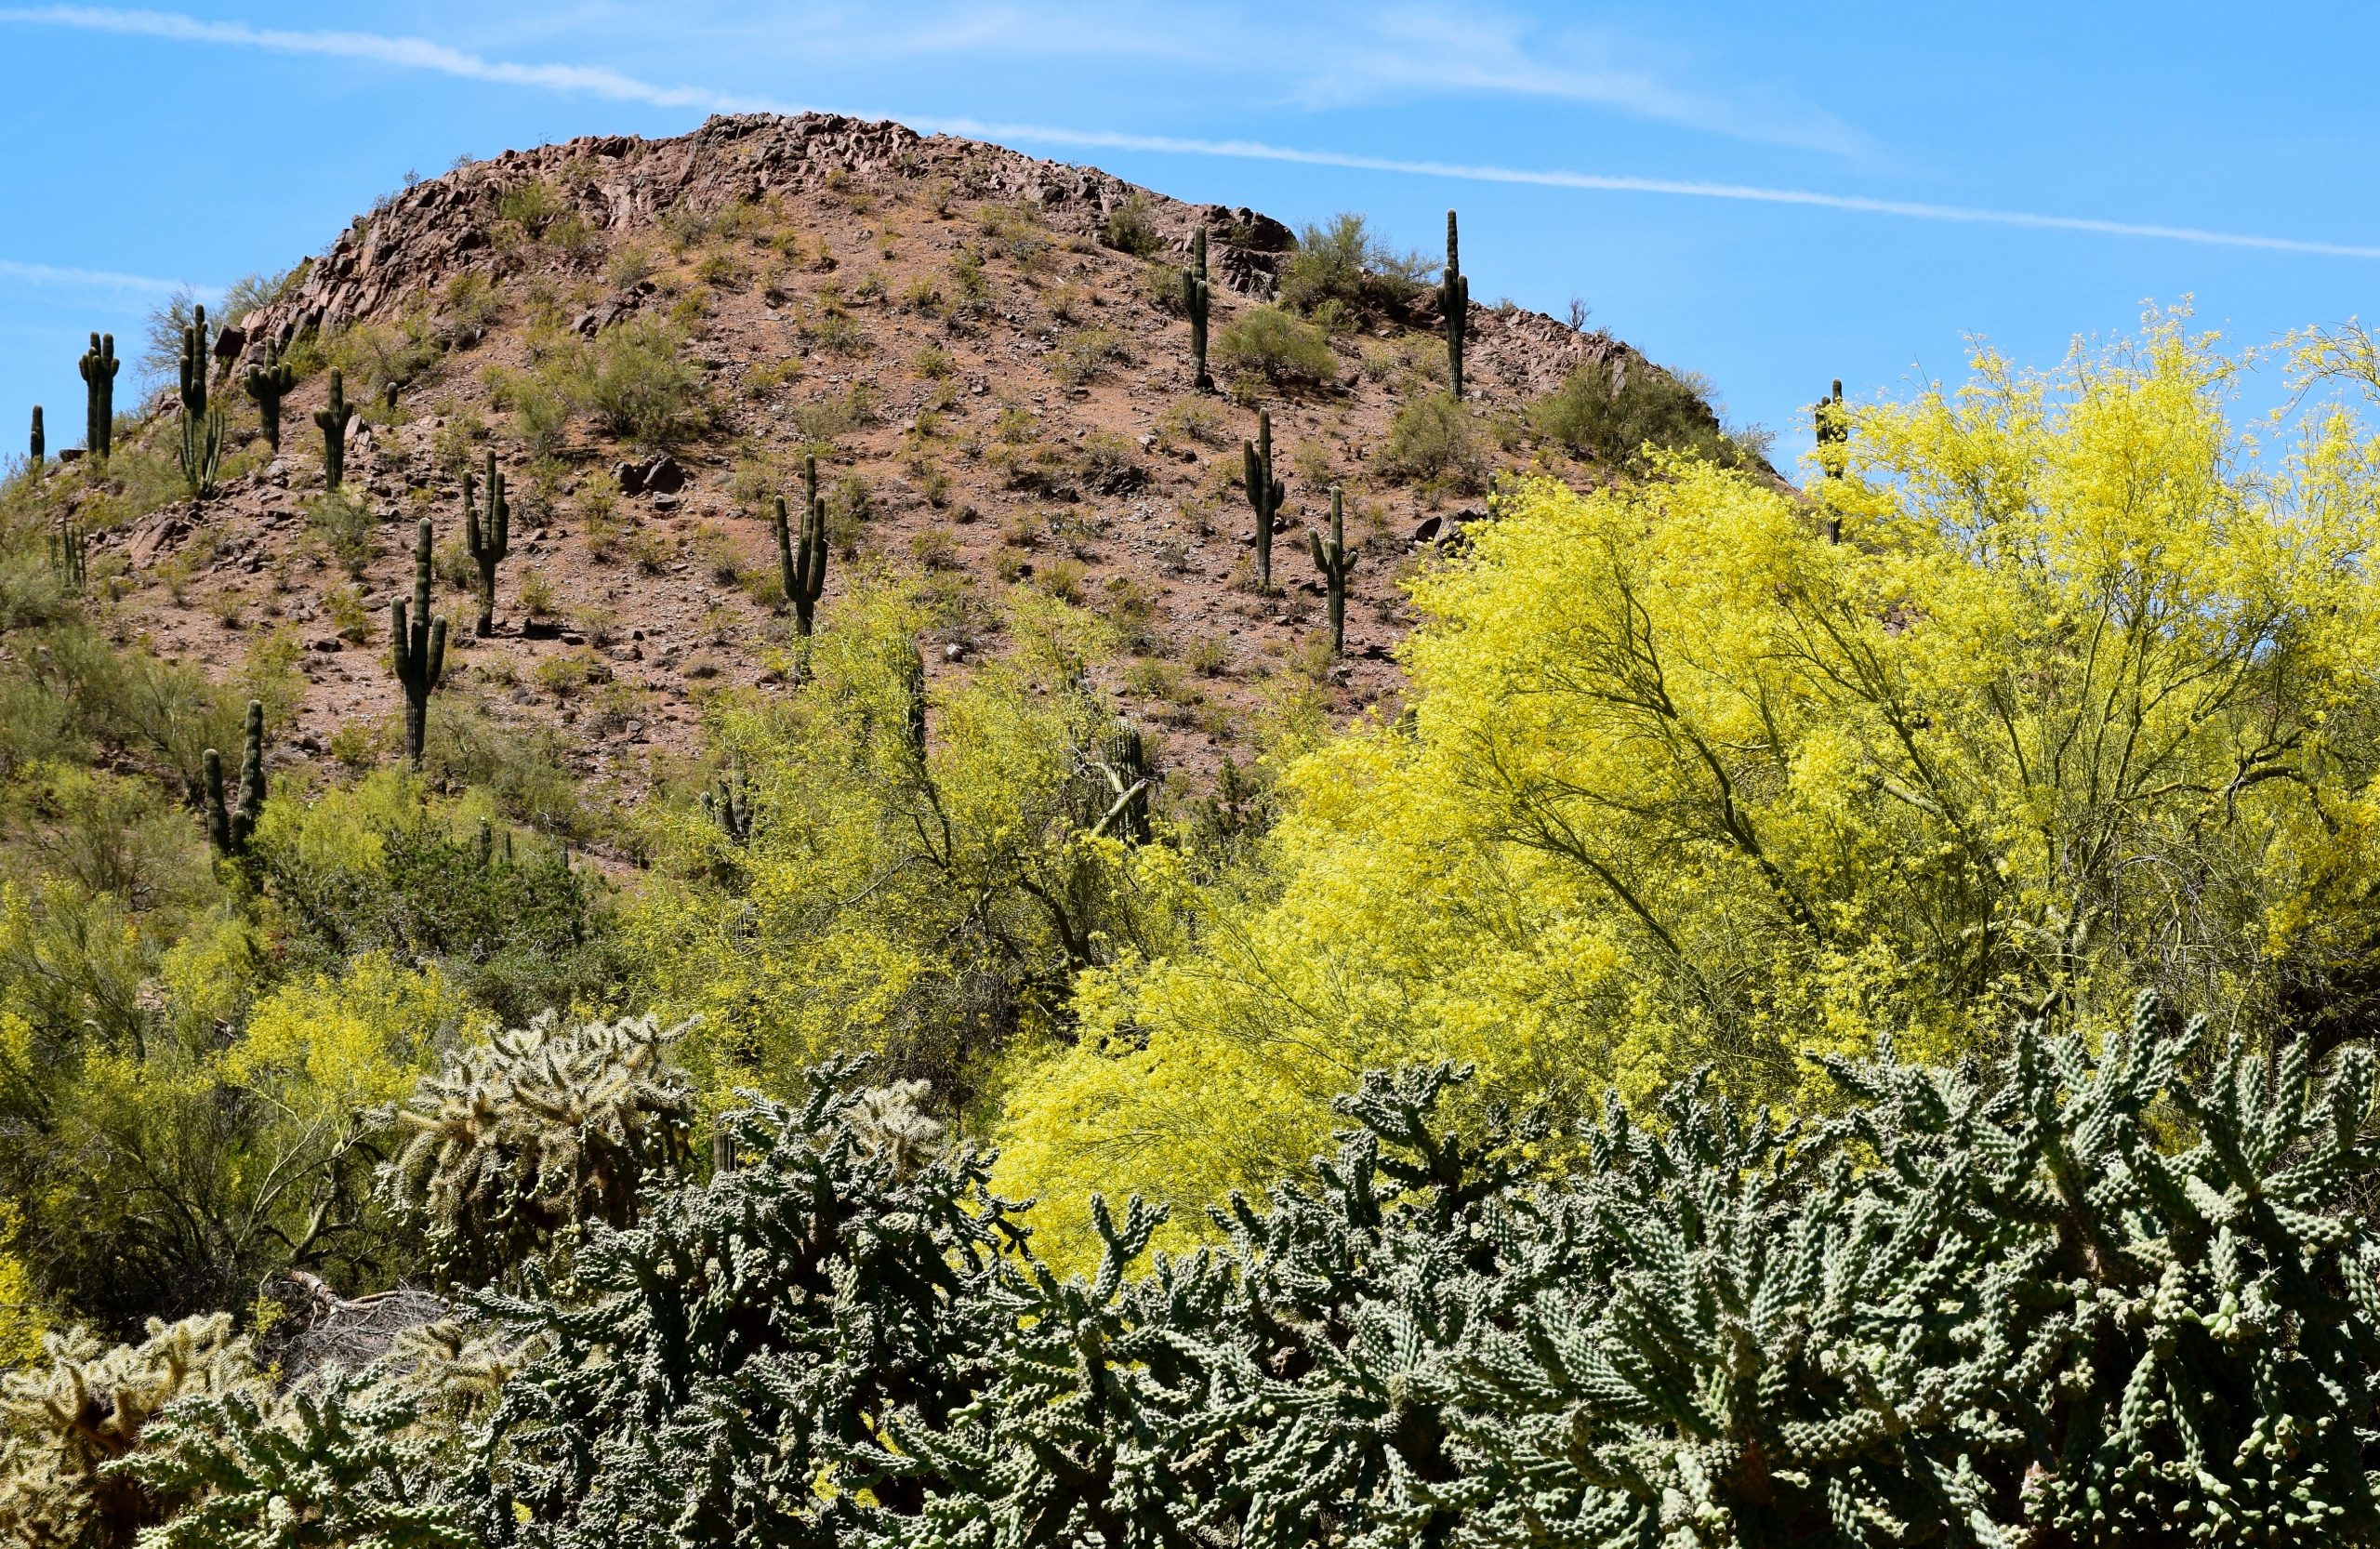 Saguaro's growing on desert hill